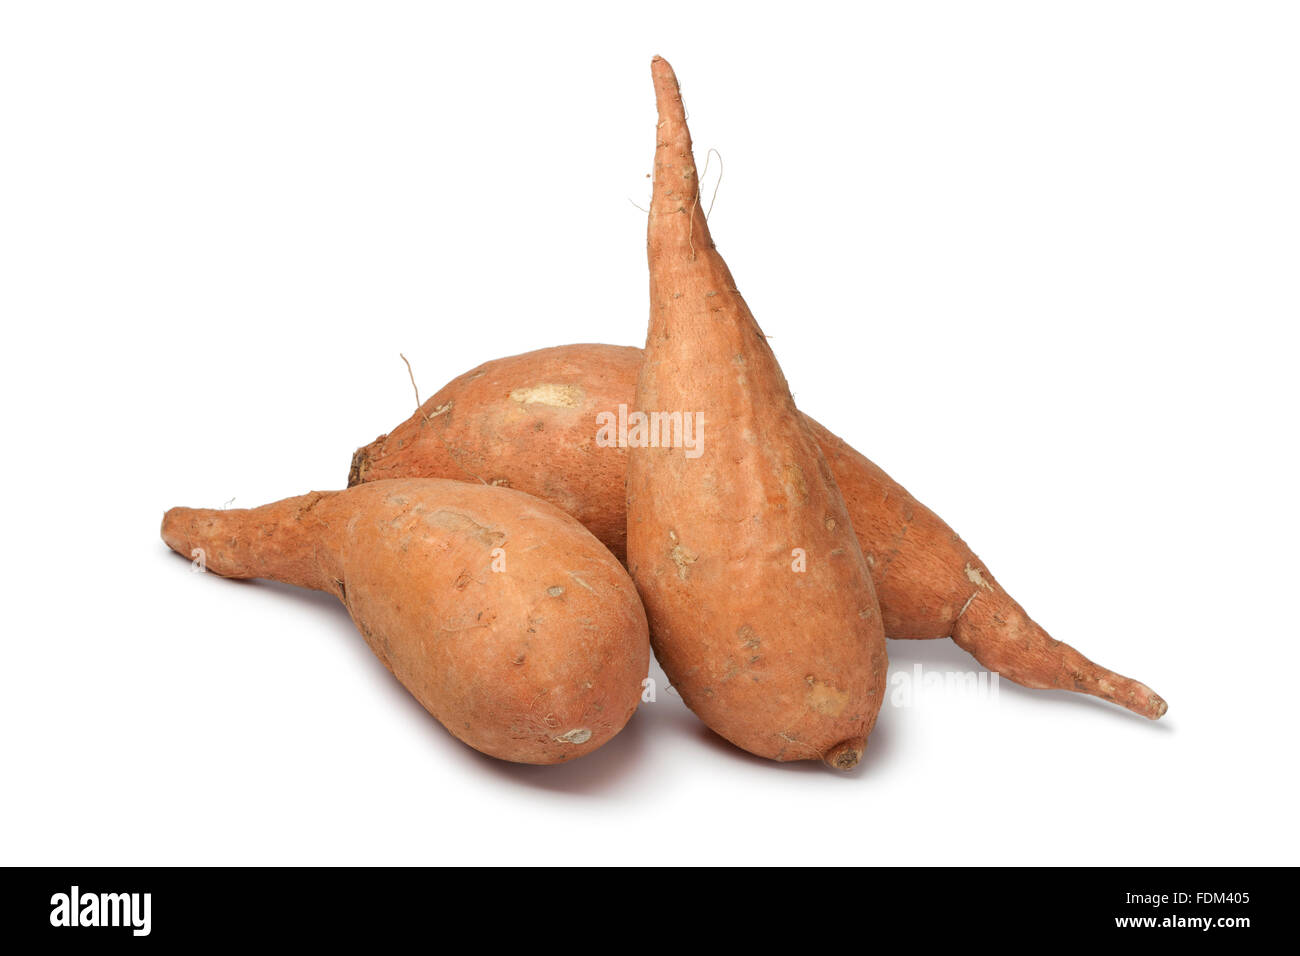 Fresh Sweet potatoes on white background Stock Photo